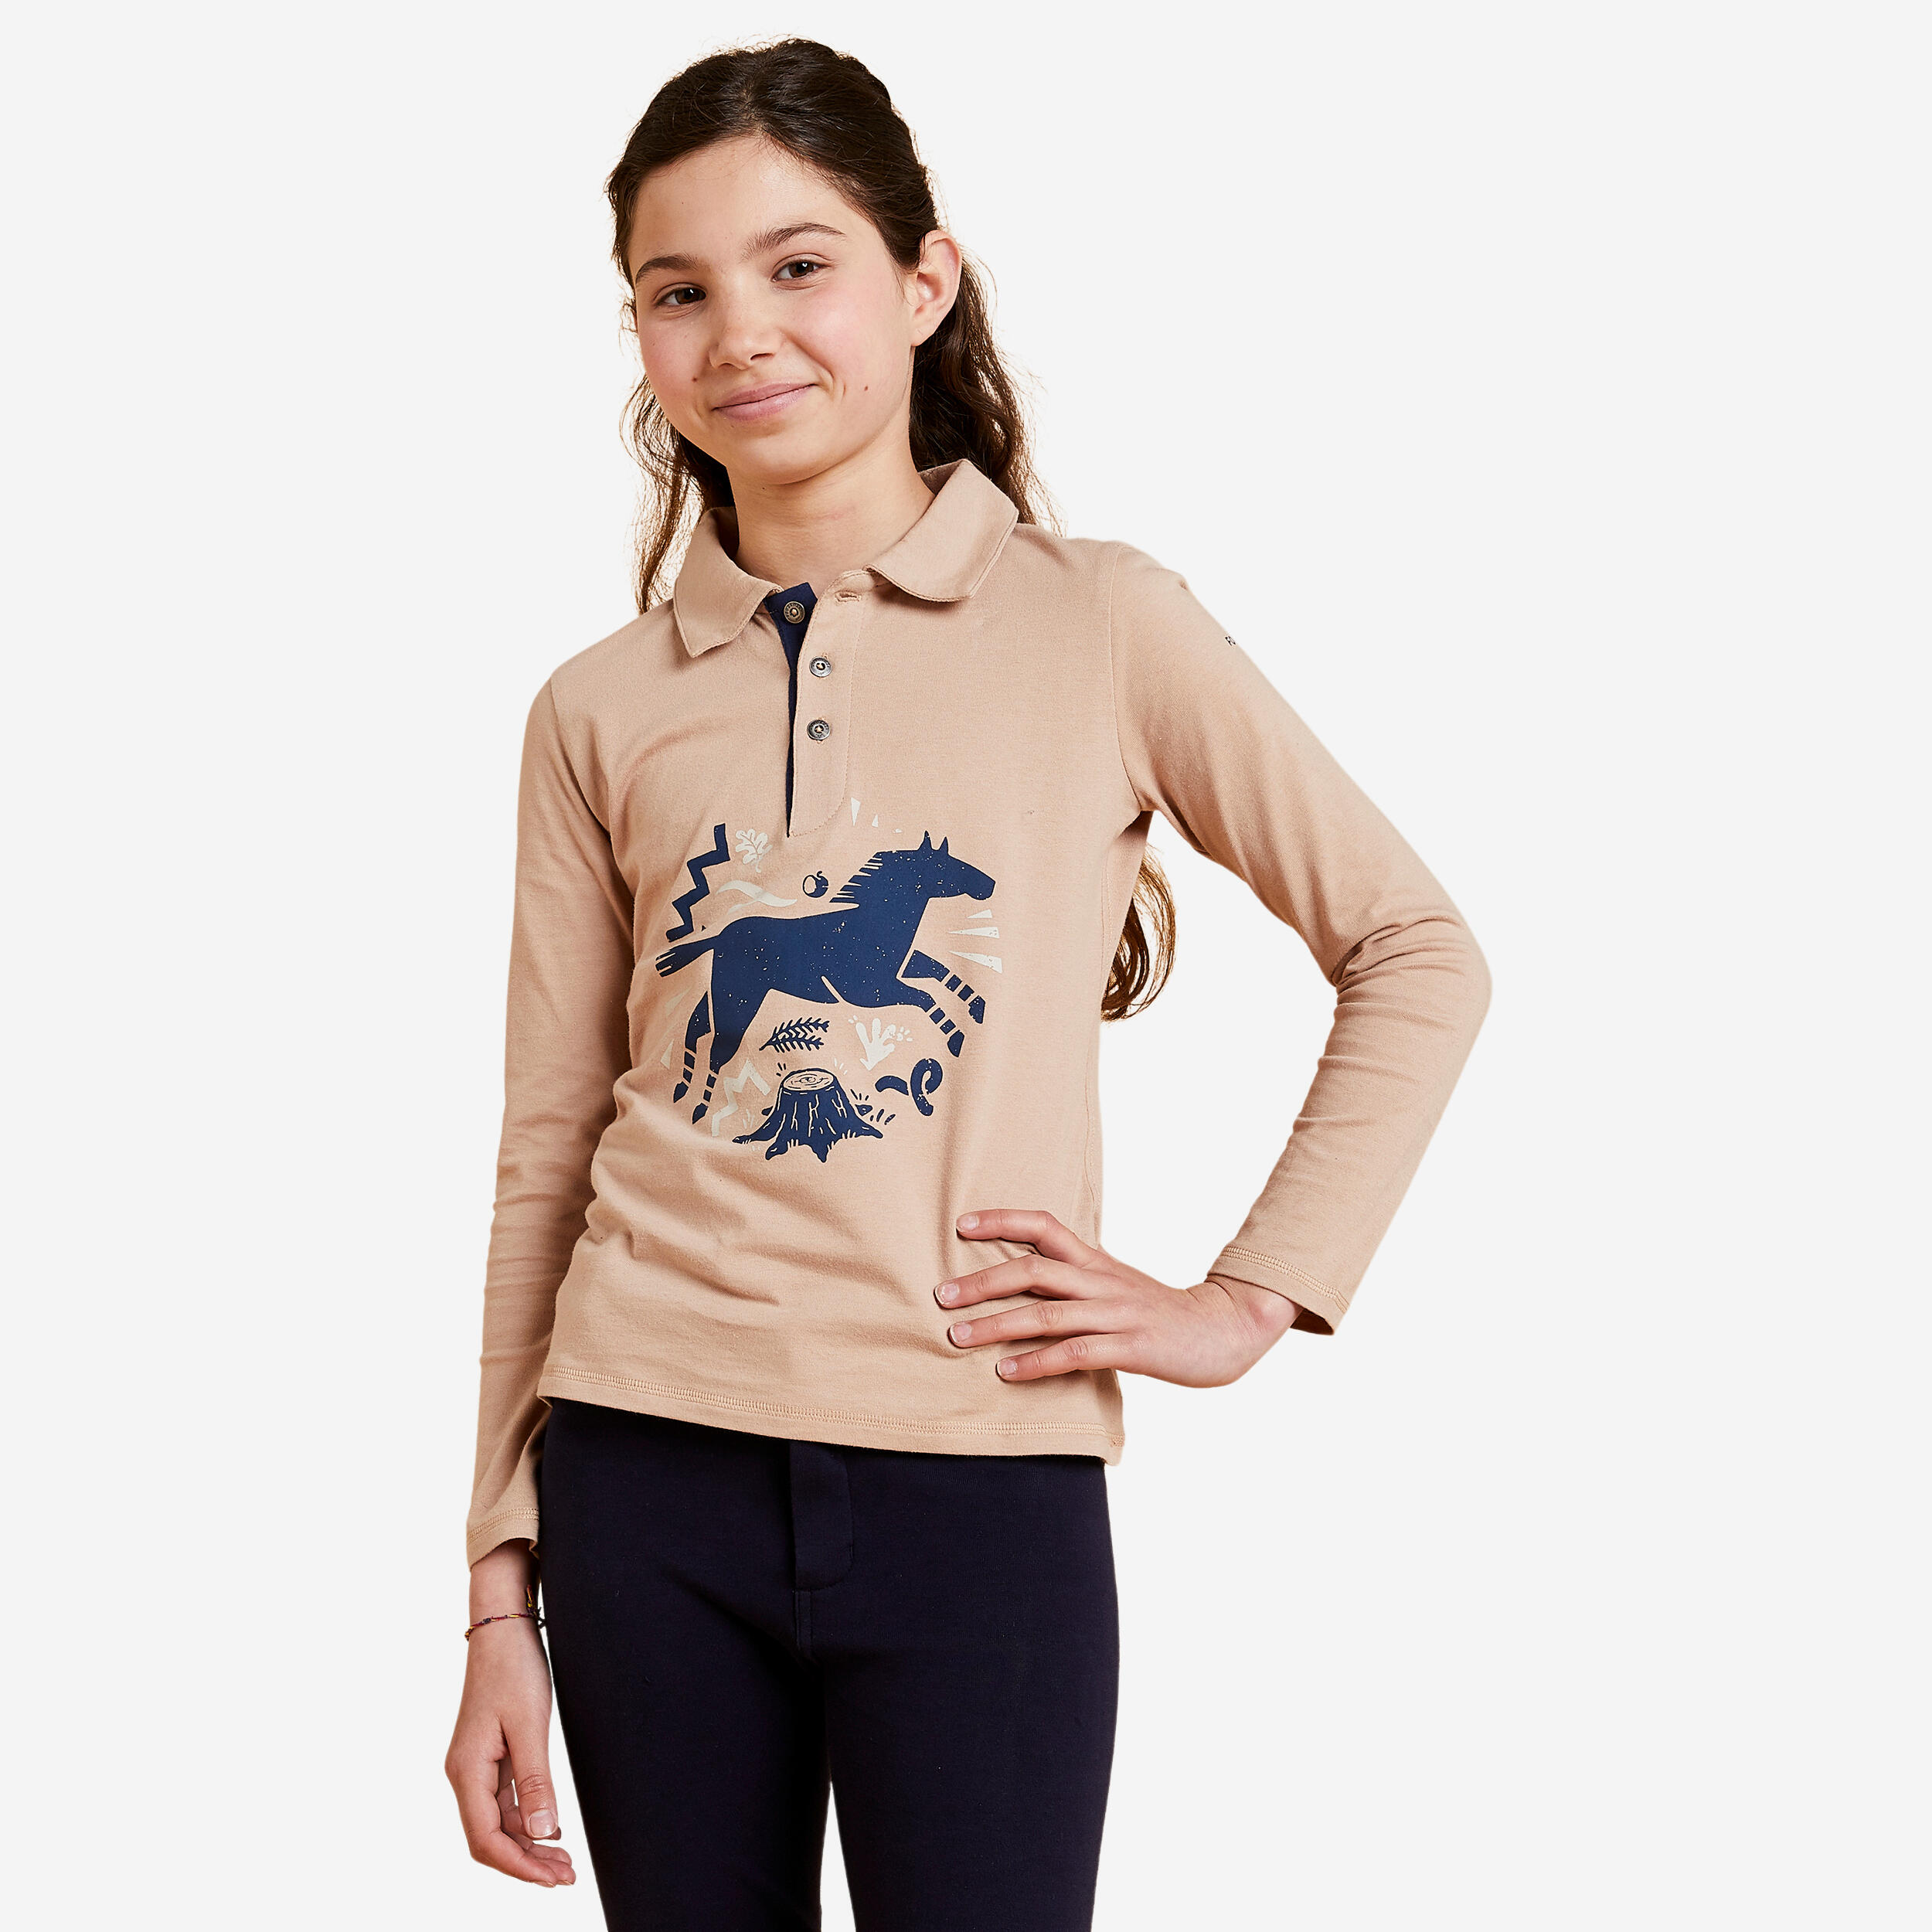 FOUGANZA Girls' Long-Sleeved Horse Riding Polo Shirt 100 - Beige/Navy